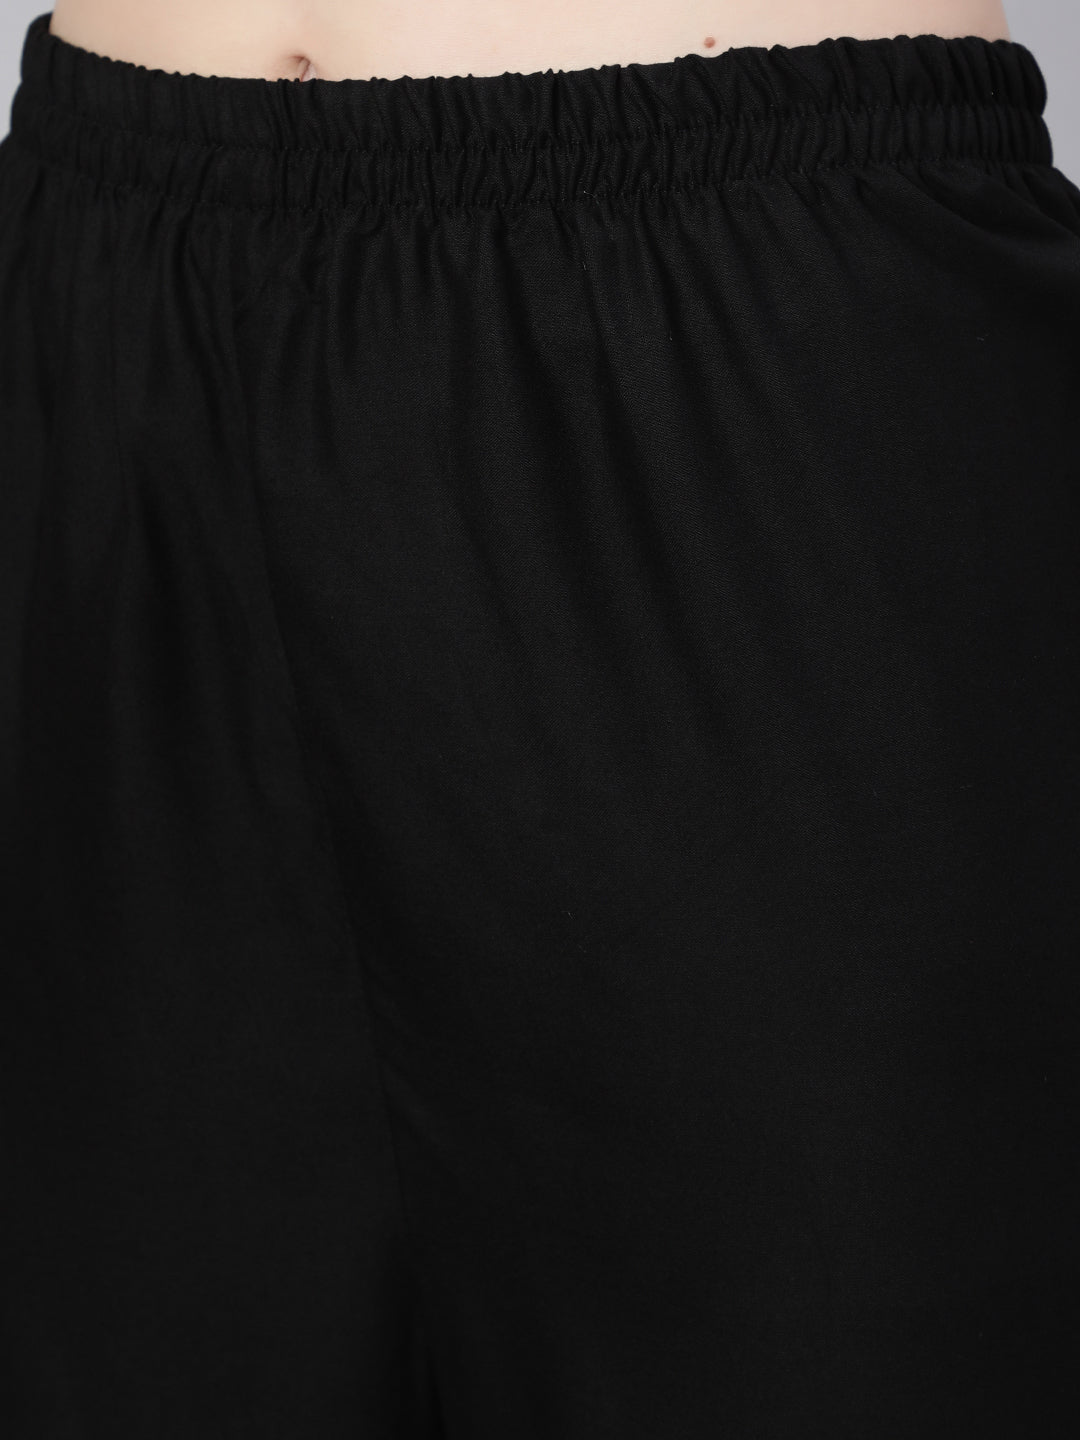 Women's Black Embroidered Straight Kurta With Palazzo And Net Dupatta - Nayo Clothing